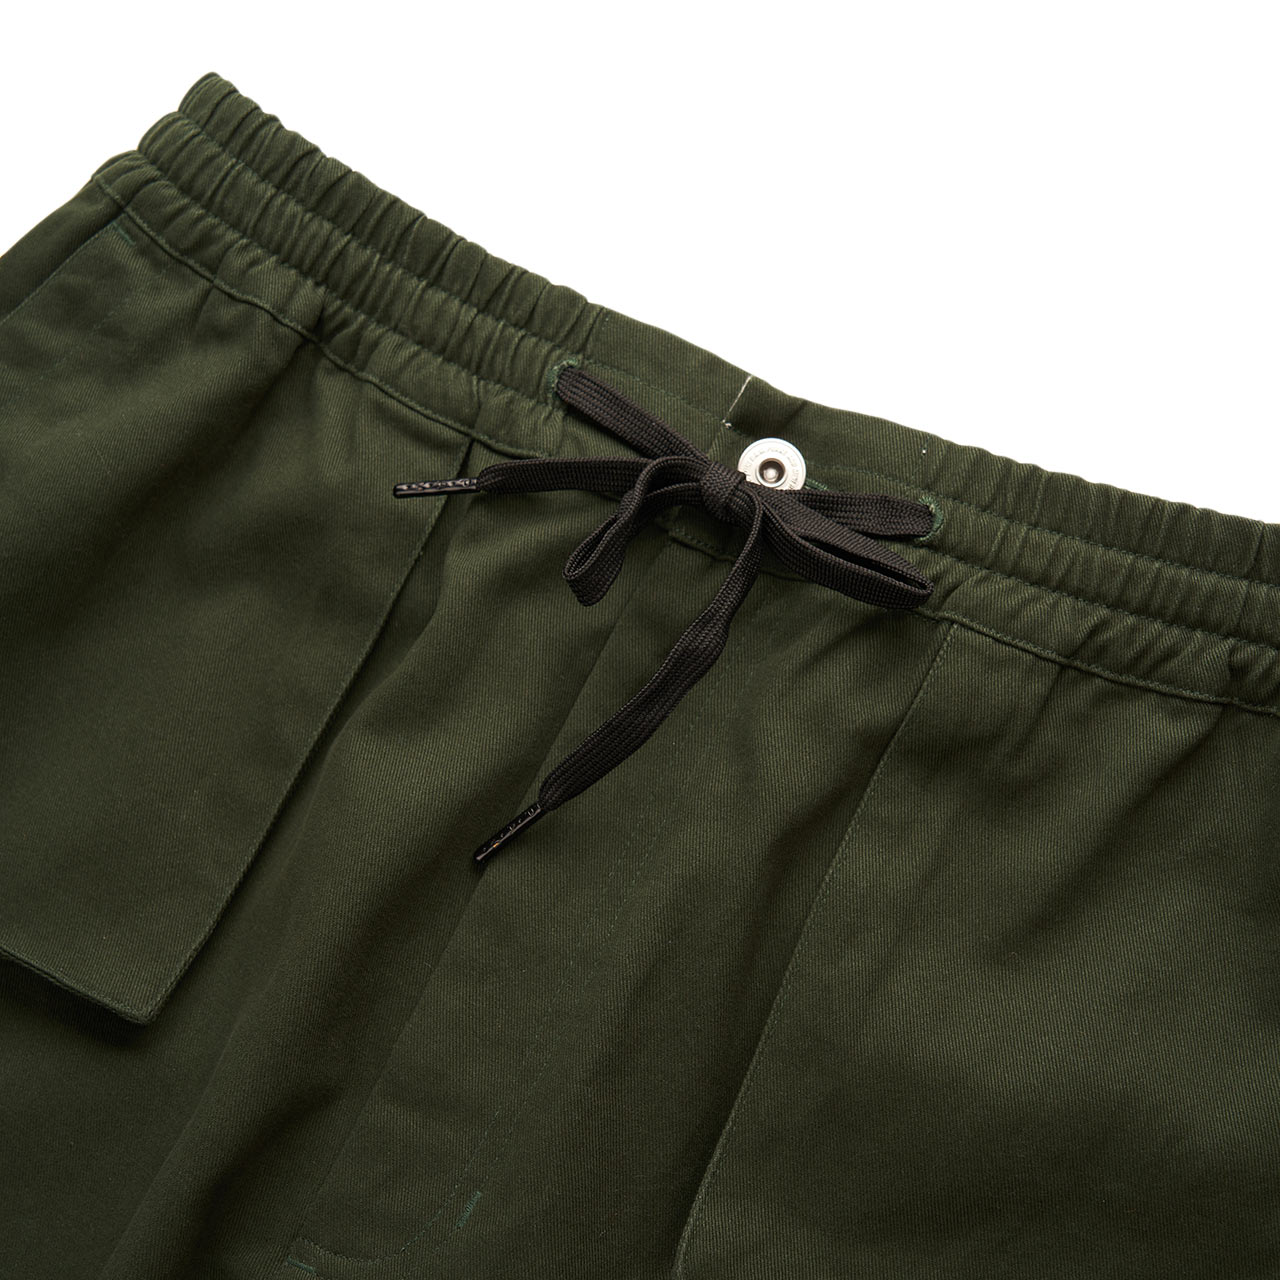 perks and mini perks and mini twill return pants (olive)